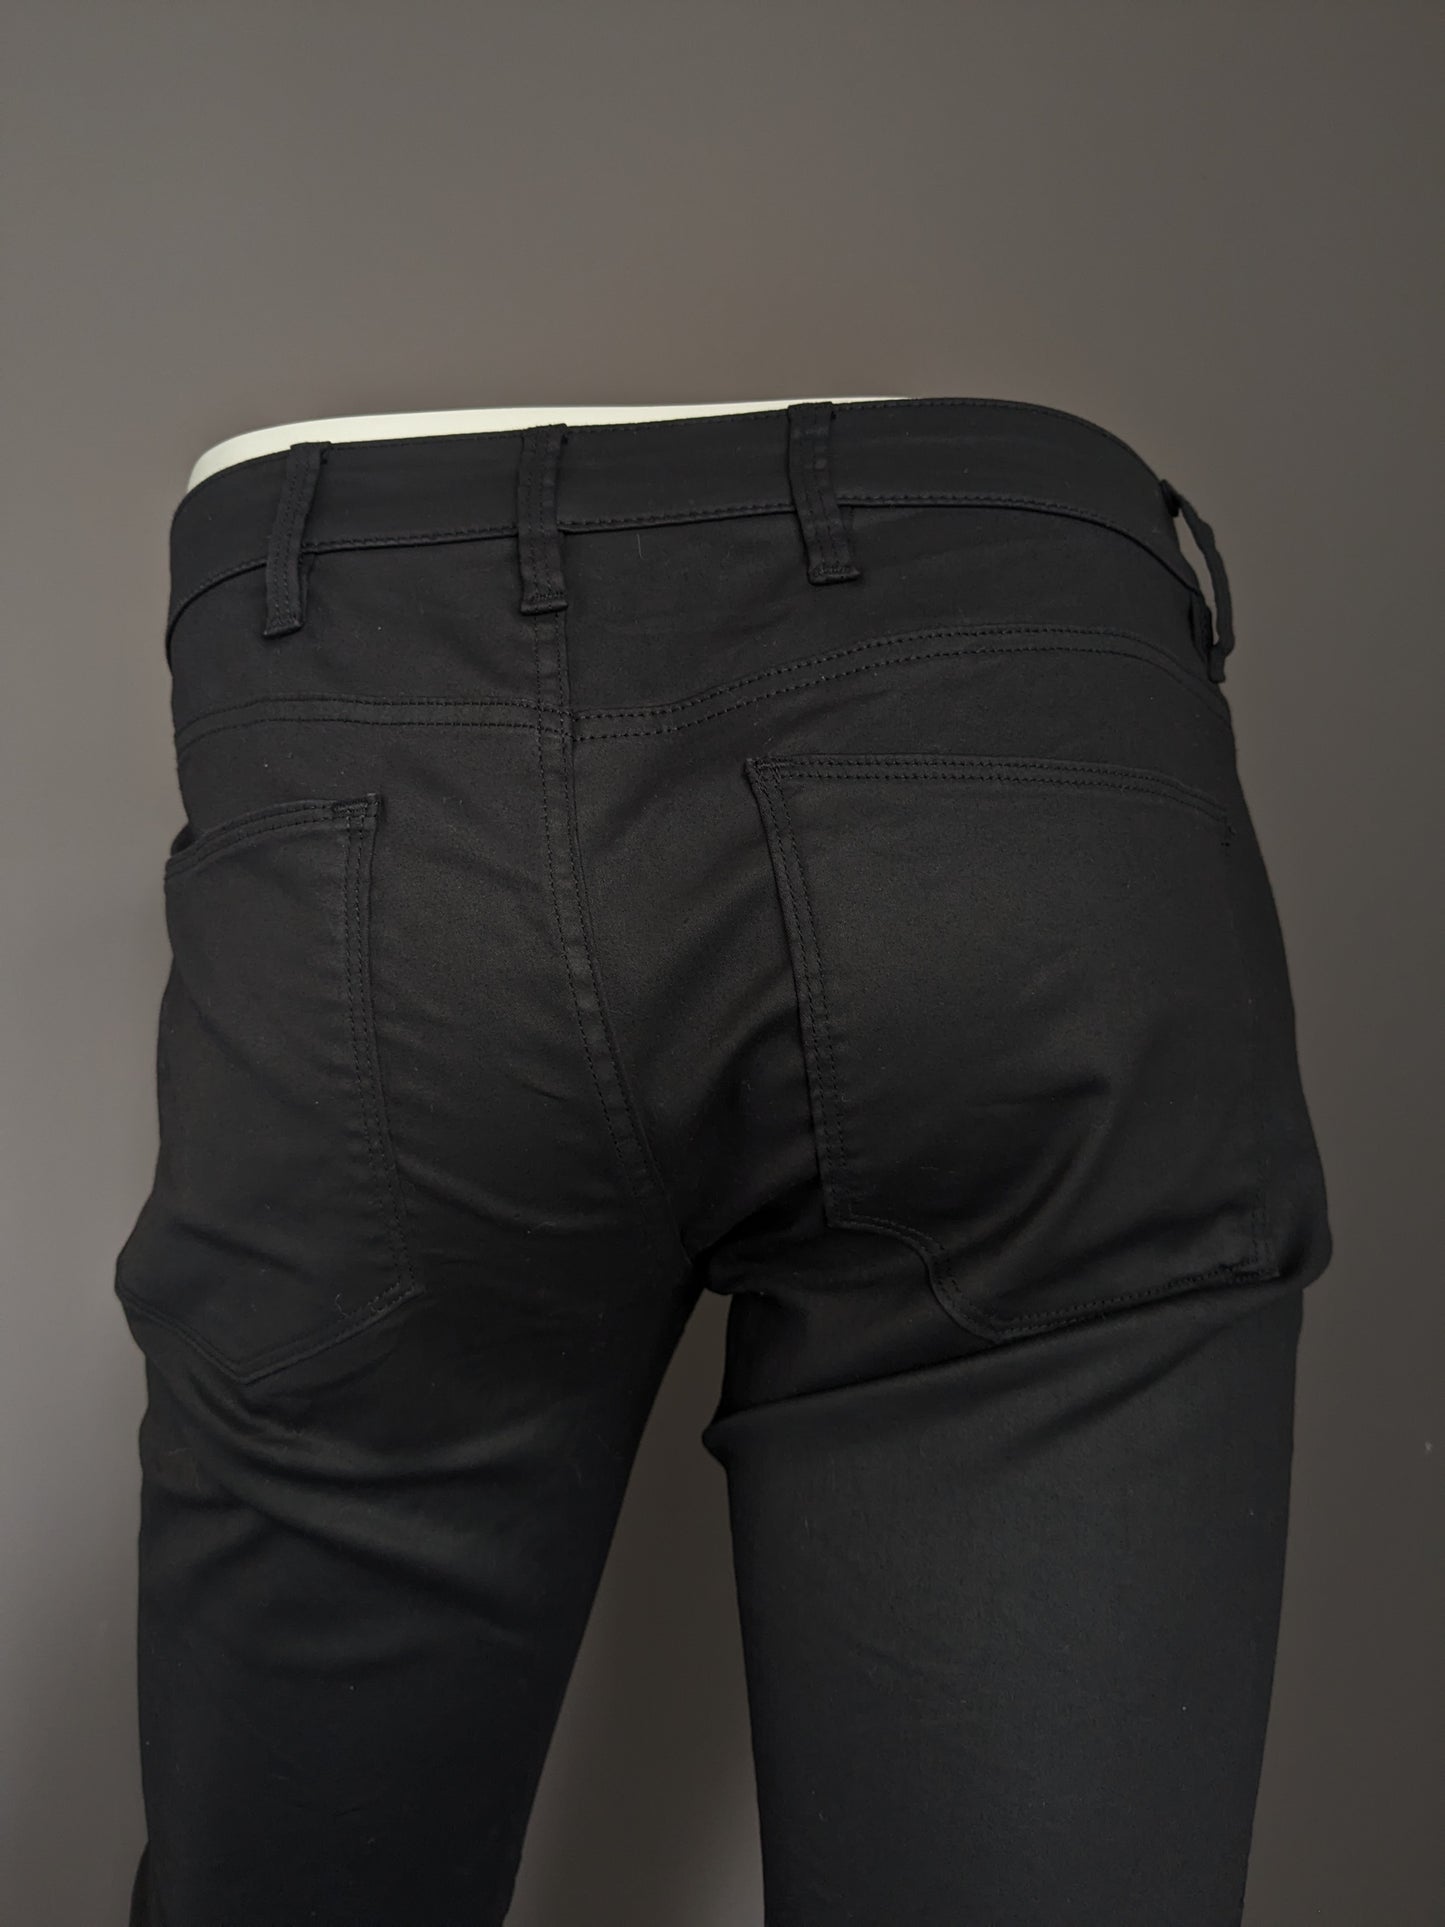 G-Star Jeans crudos. Revestimiento negro. Tipo 5620 Custom. Tamaño W29 - L32. Estirar.